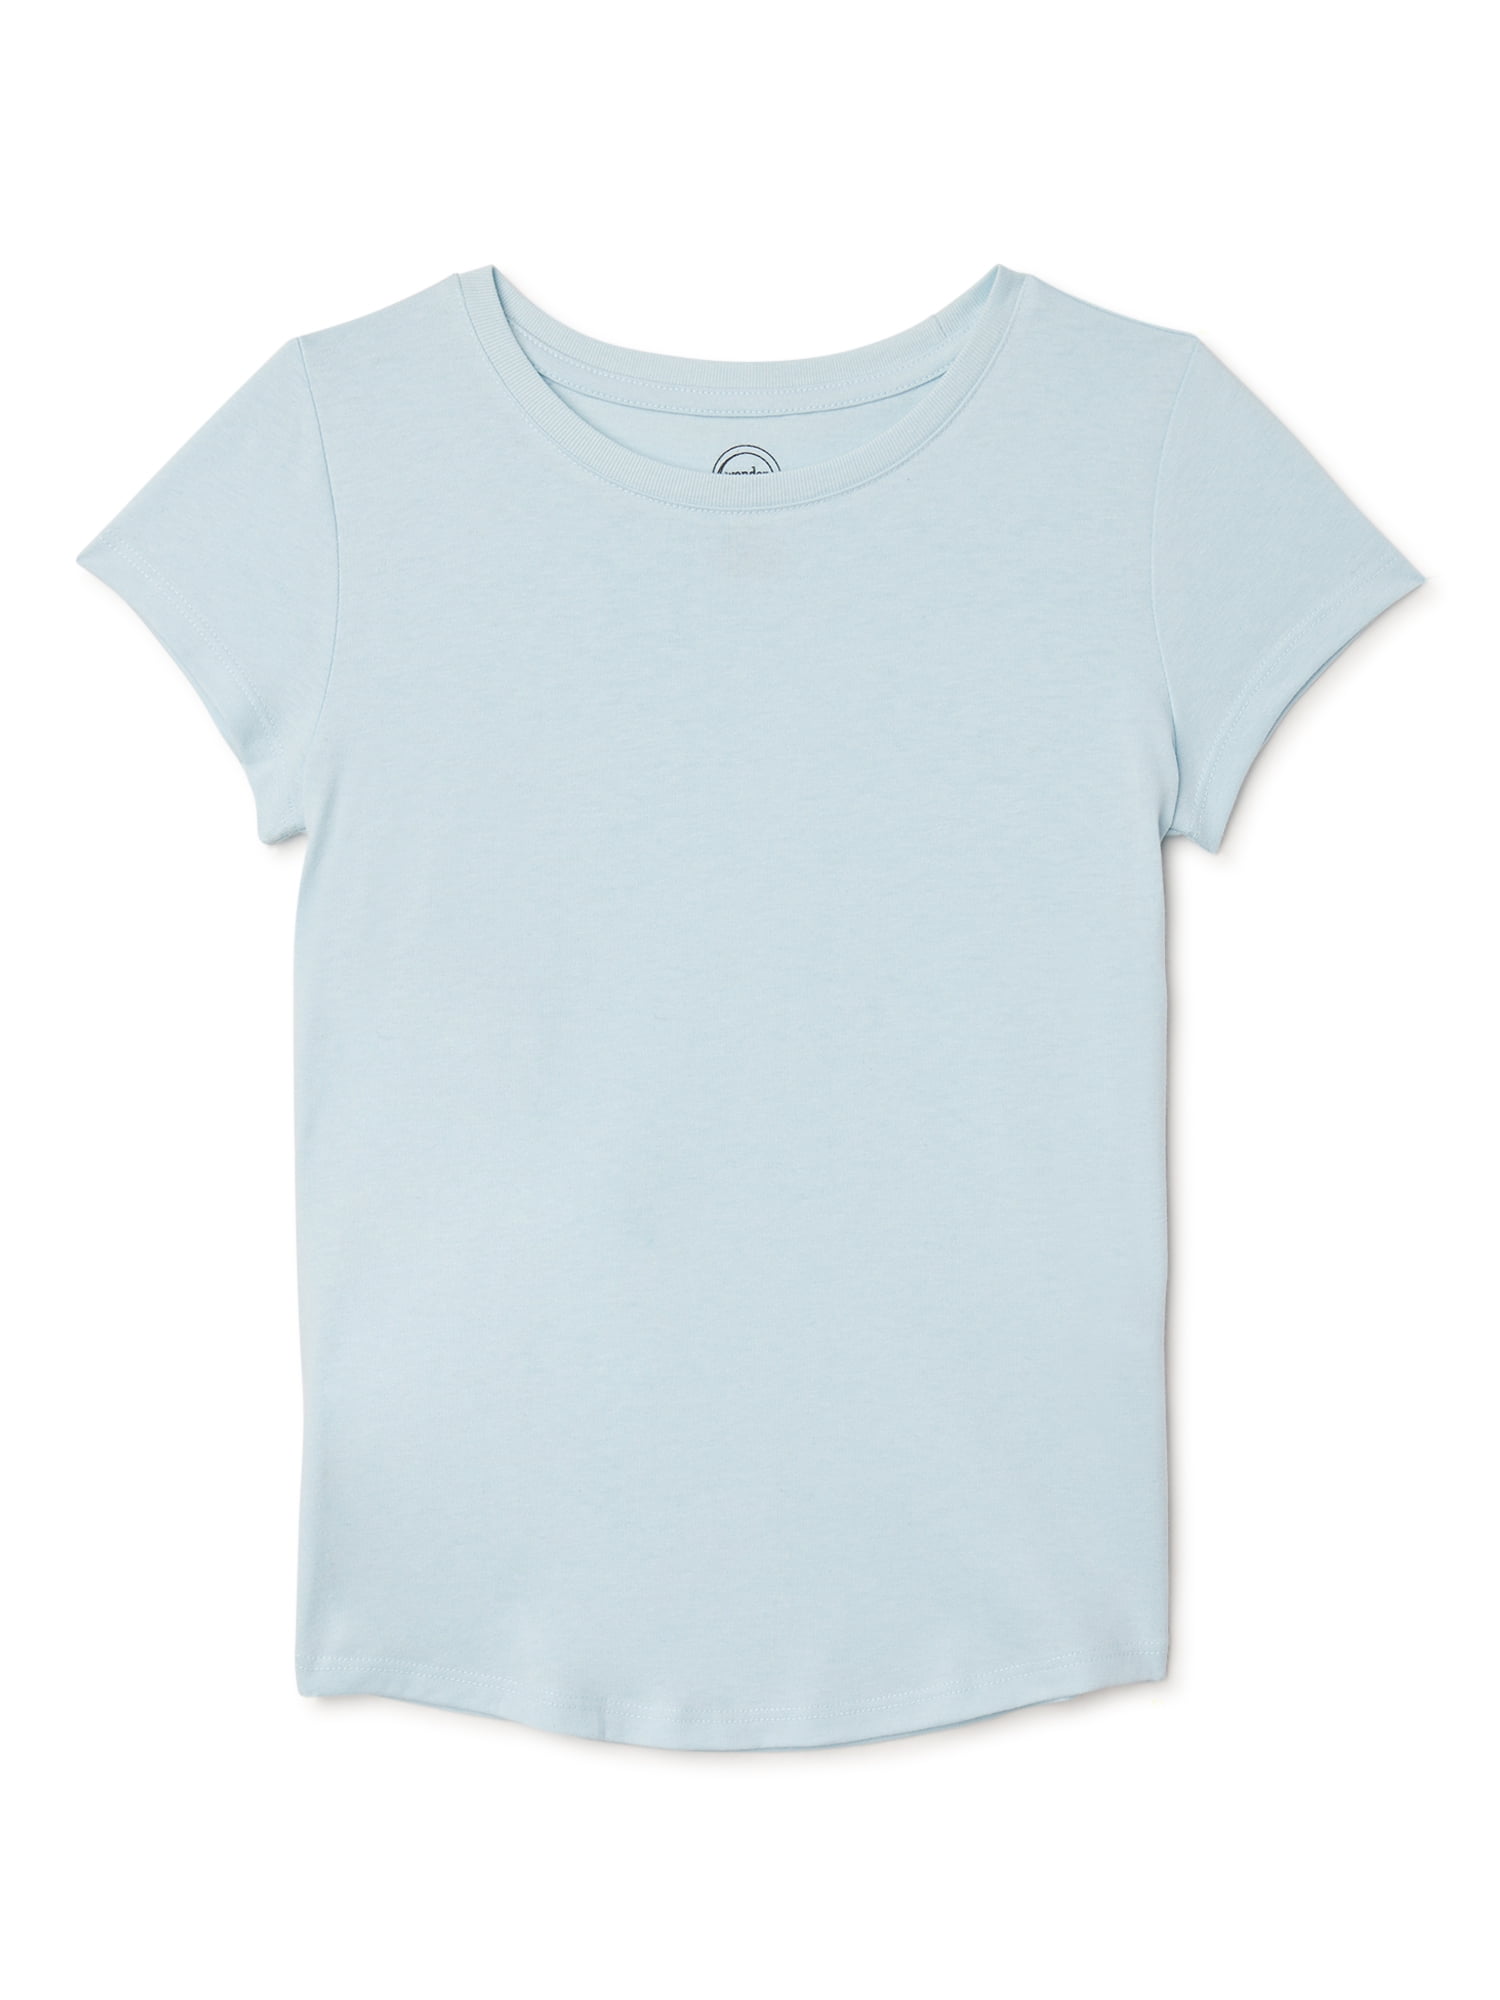 Wonder Nation Girls Kid Tough T-Shirt with Short Sleeves, Sizes 4-18 & Plus